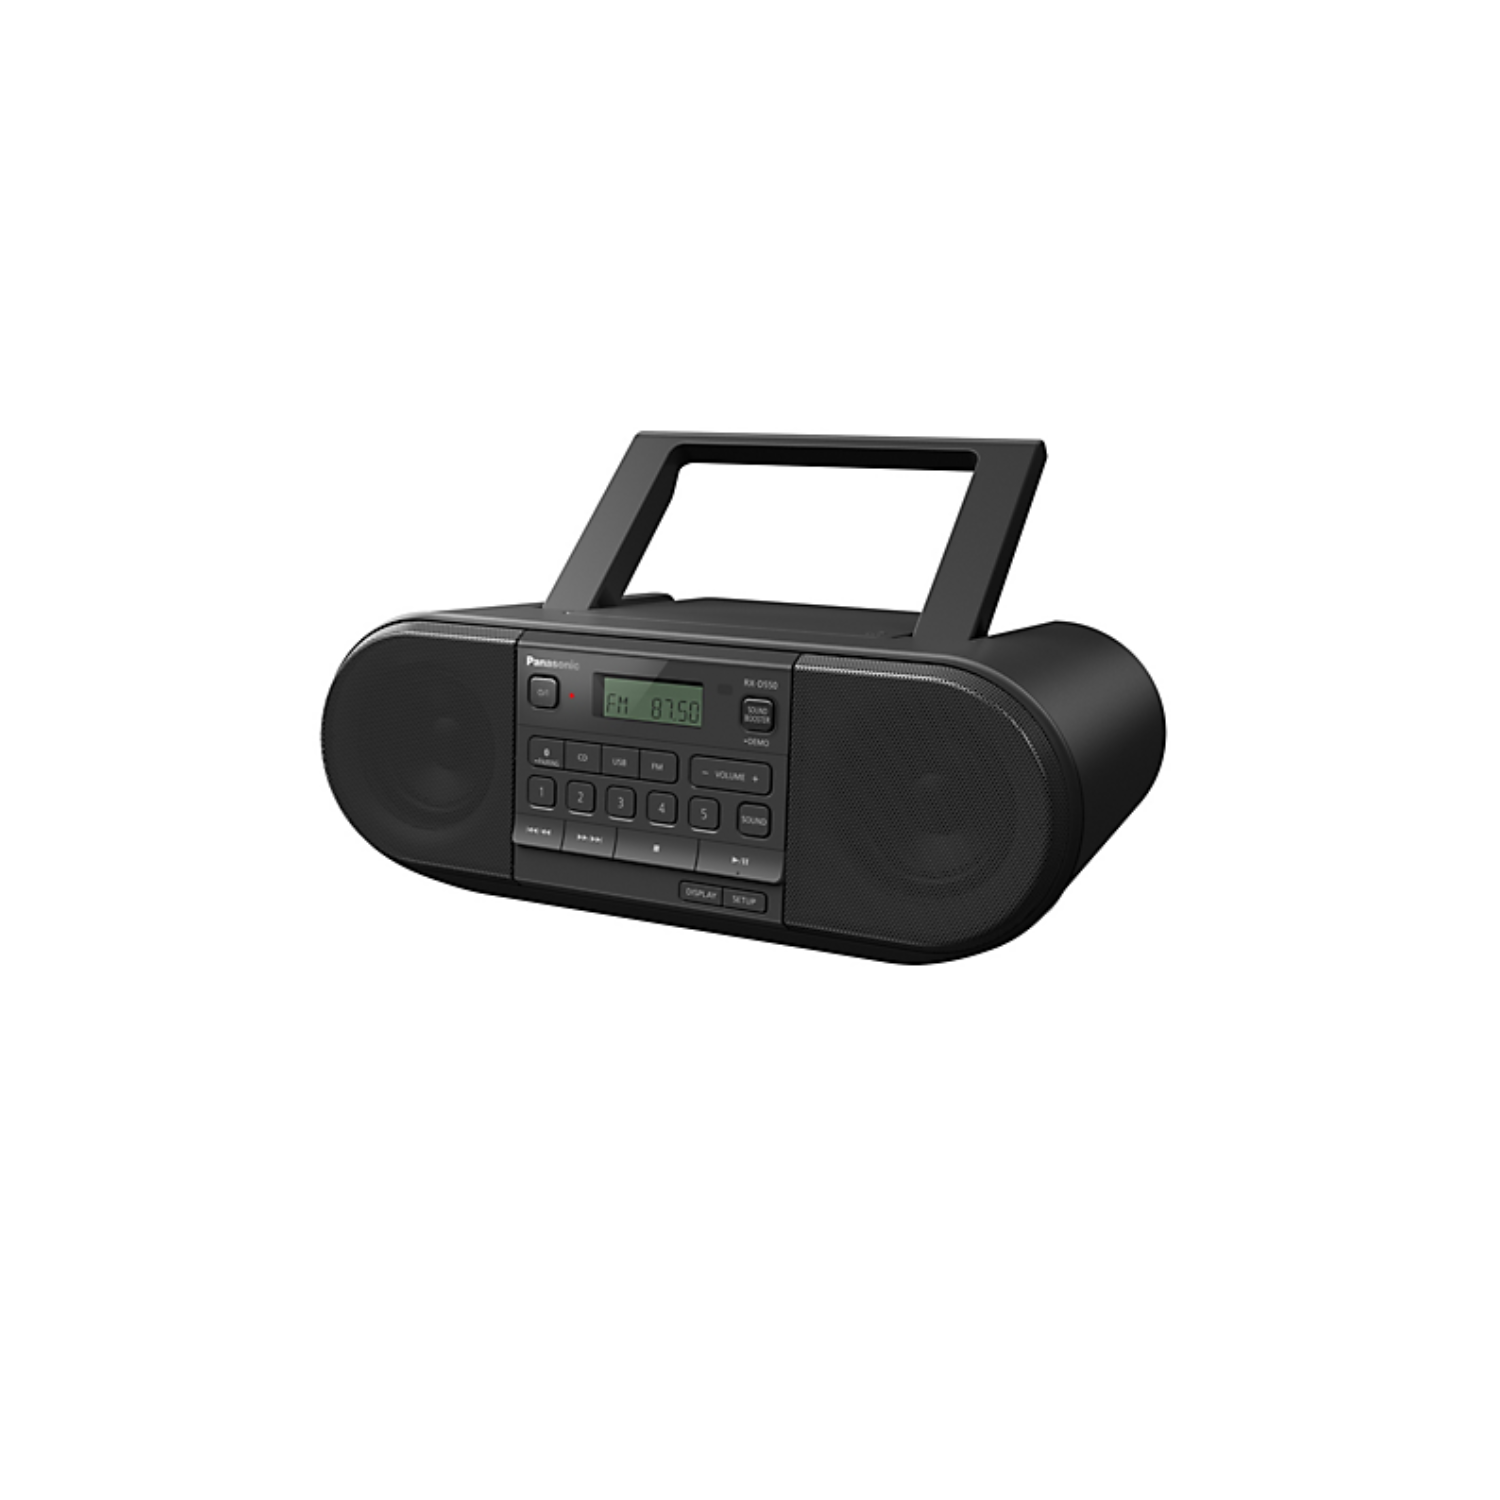 Panasonic RX-D550 Portable Radio with CD, Bluetooth and USB